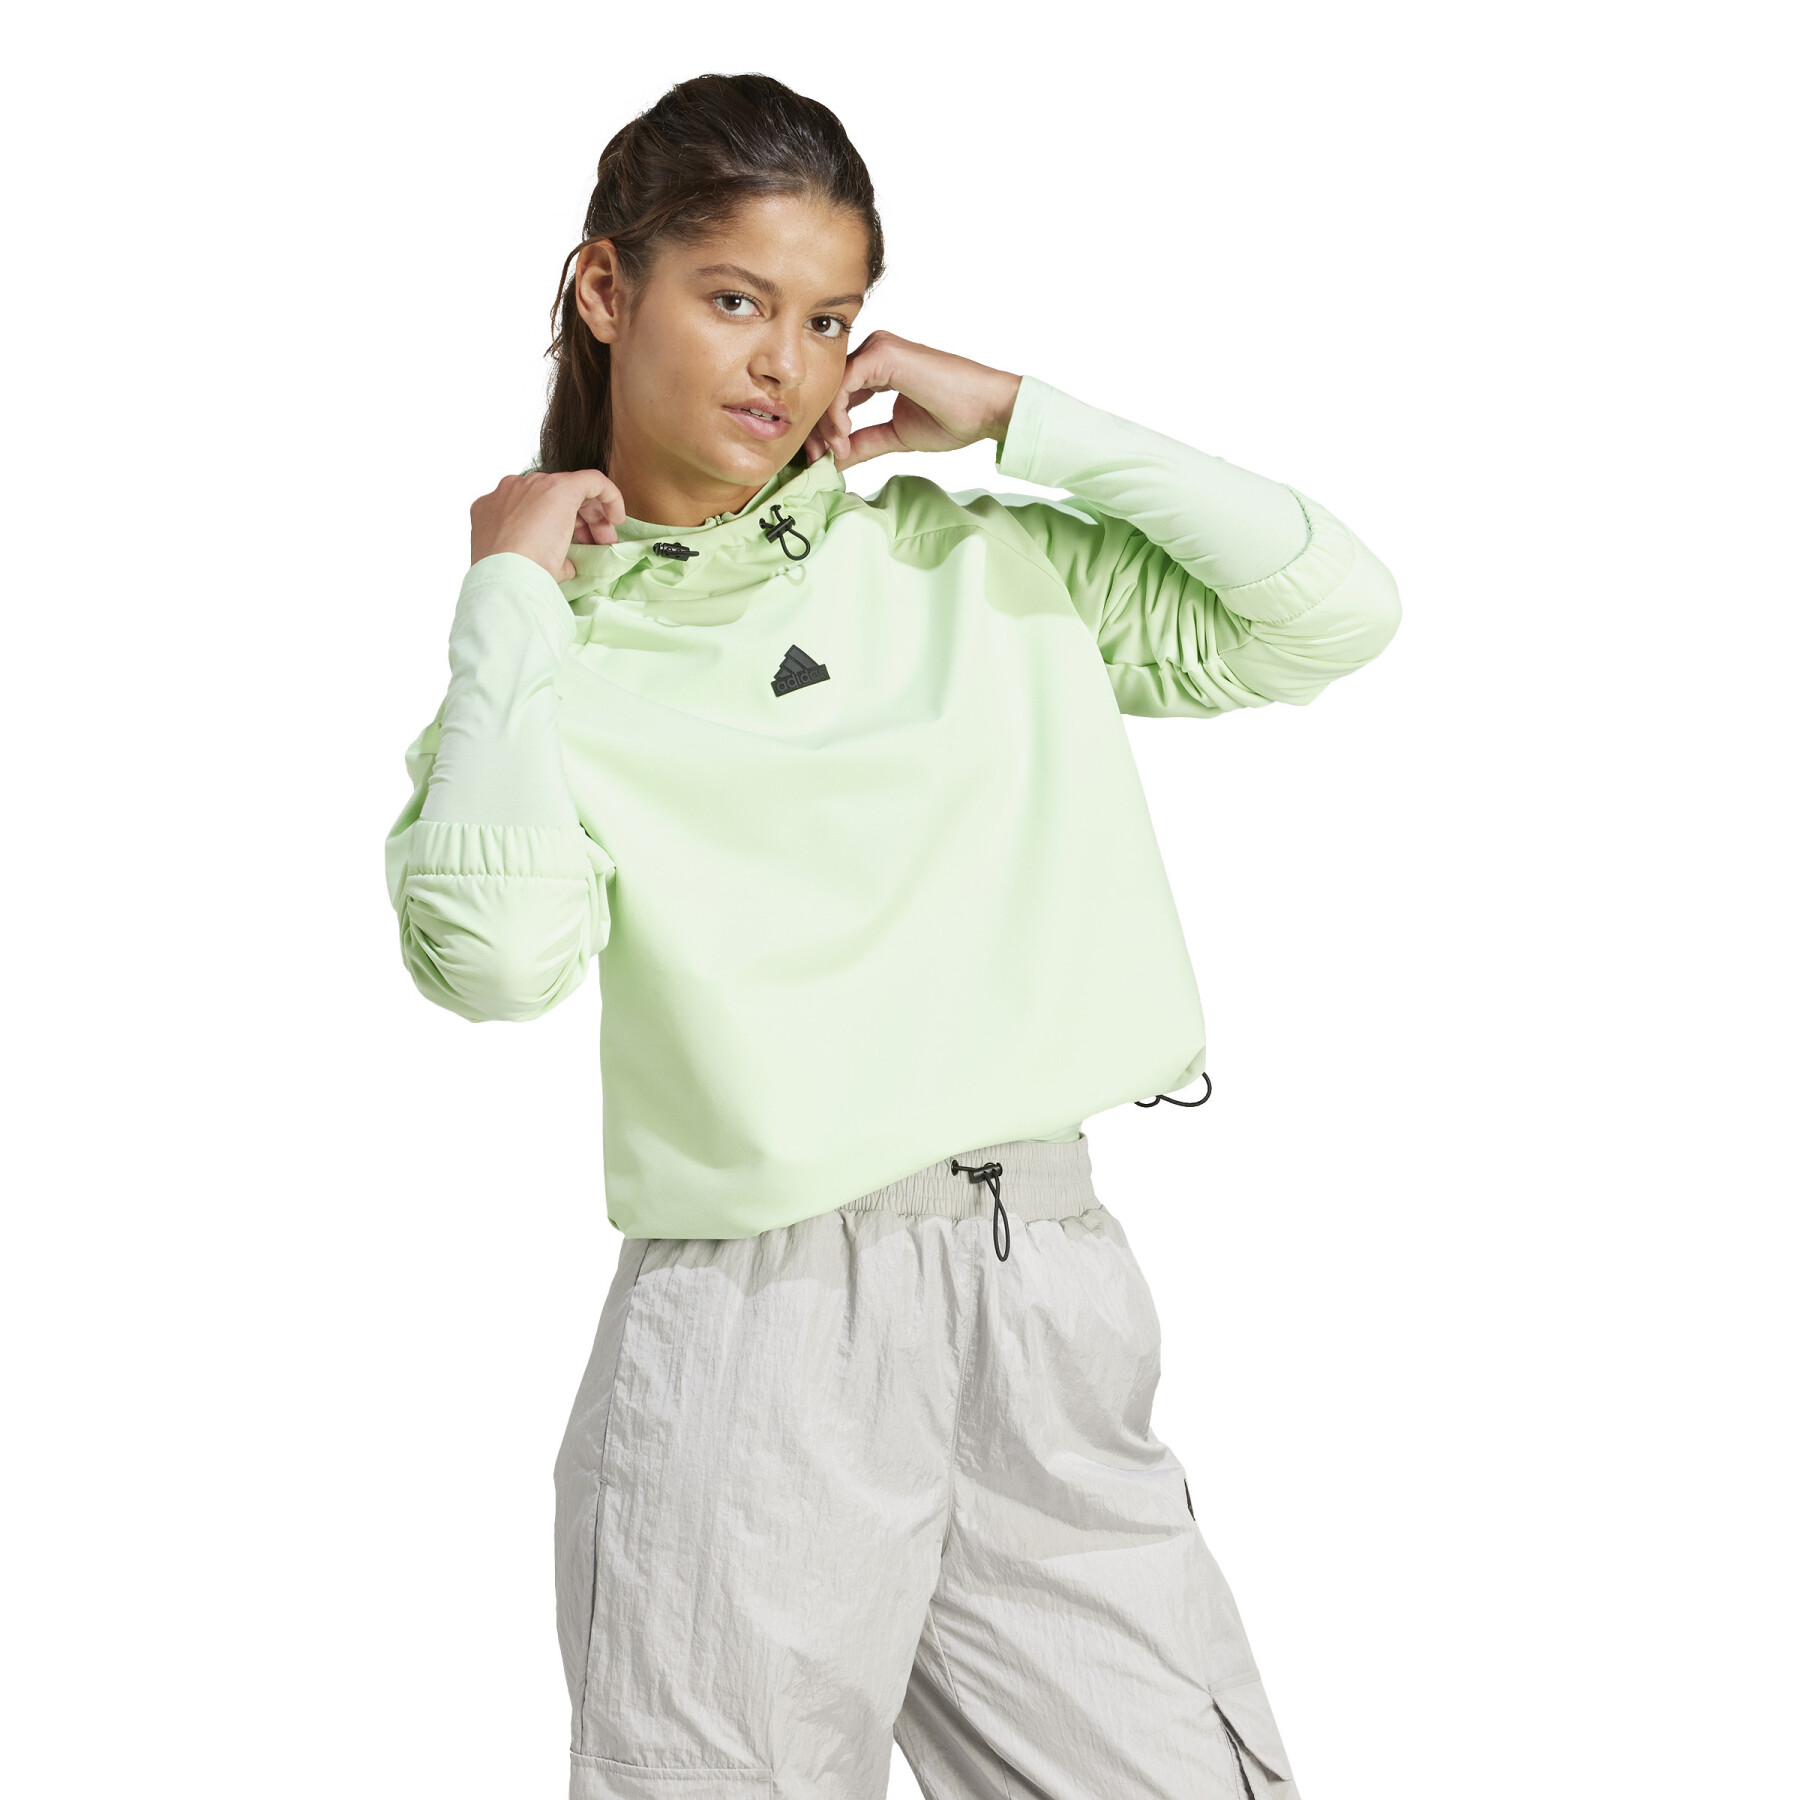 Kapuzen-Sweatshirt mit elastischem Kordelzug, Damen adidas City Escape